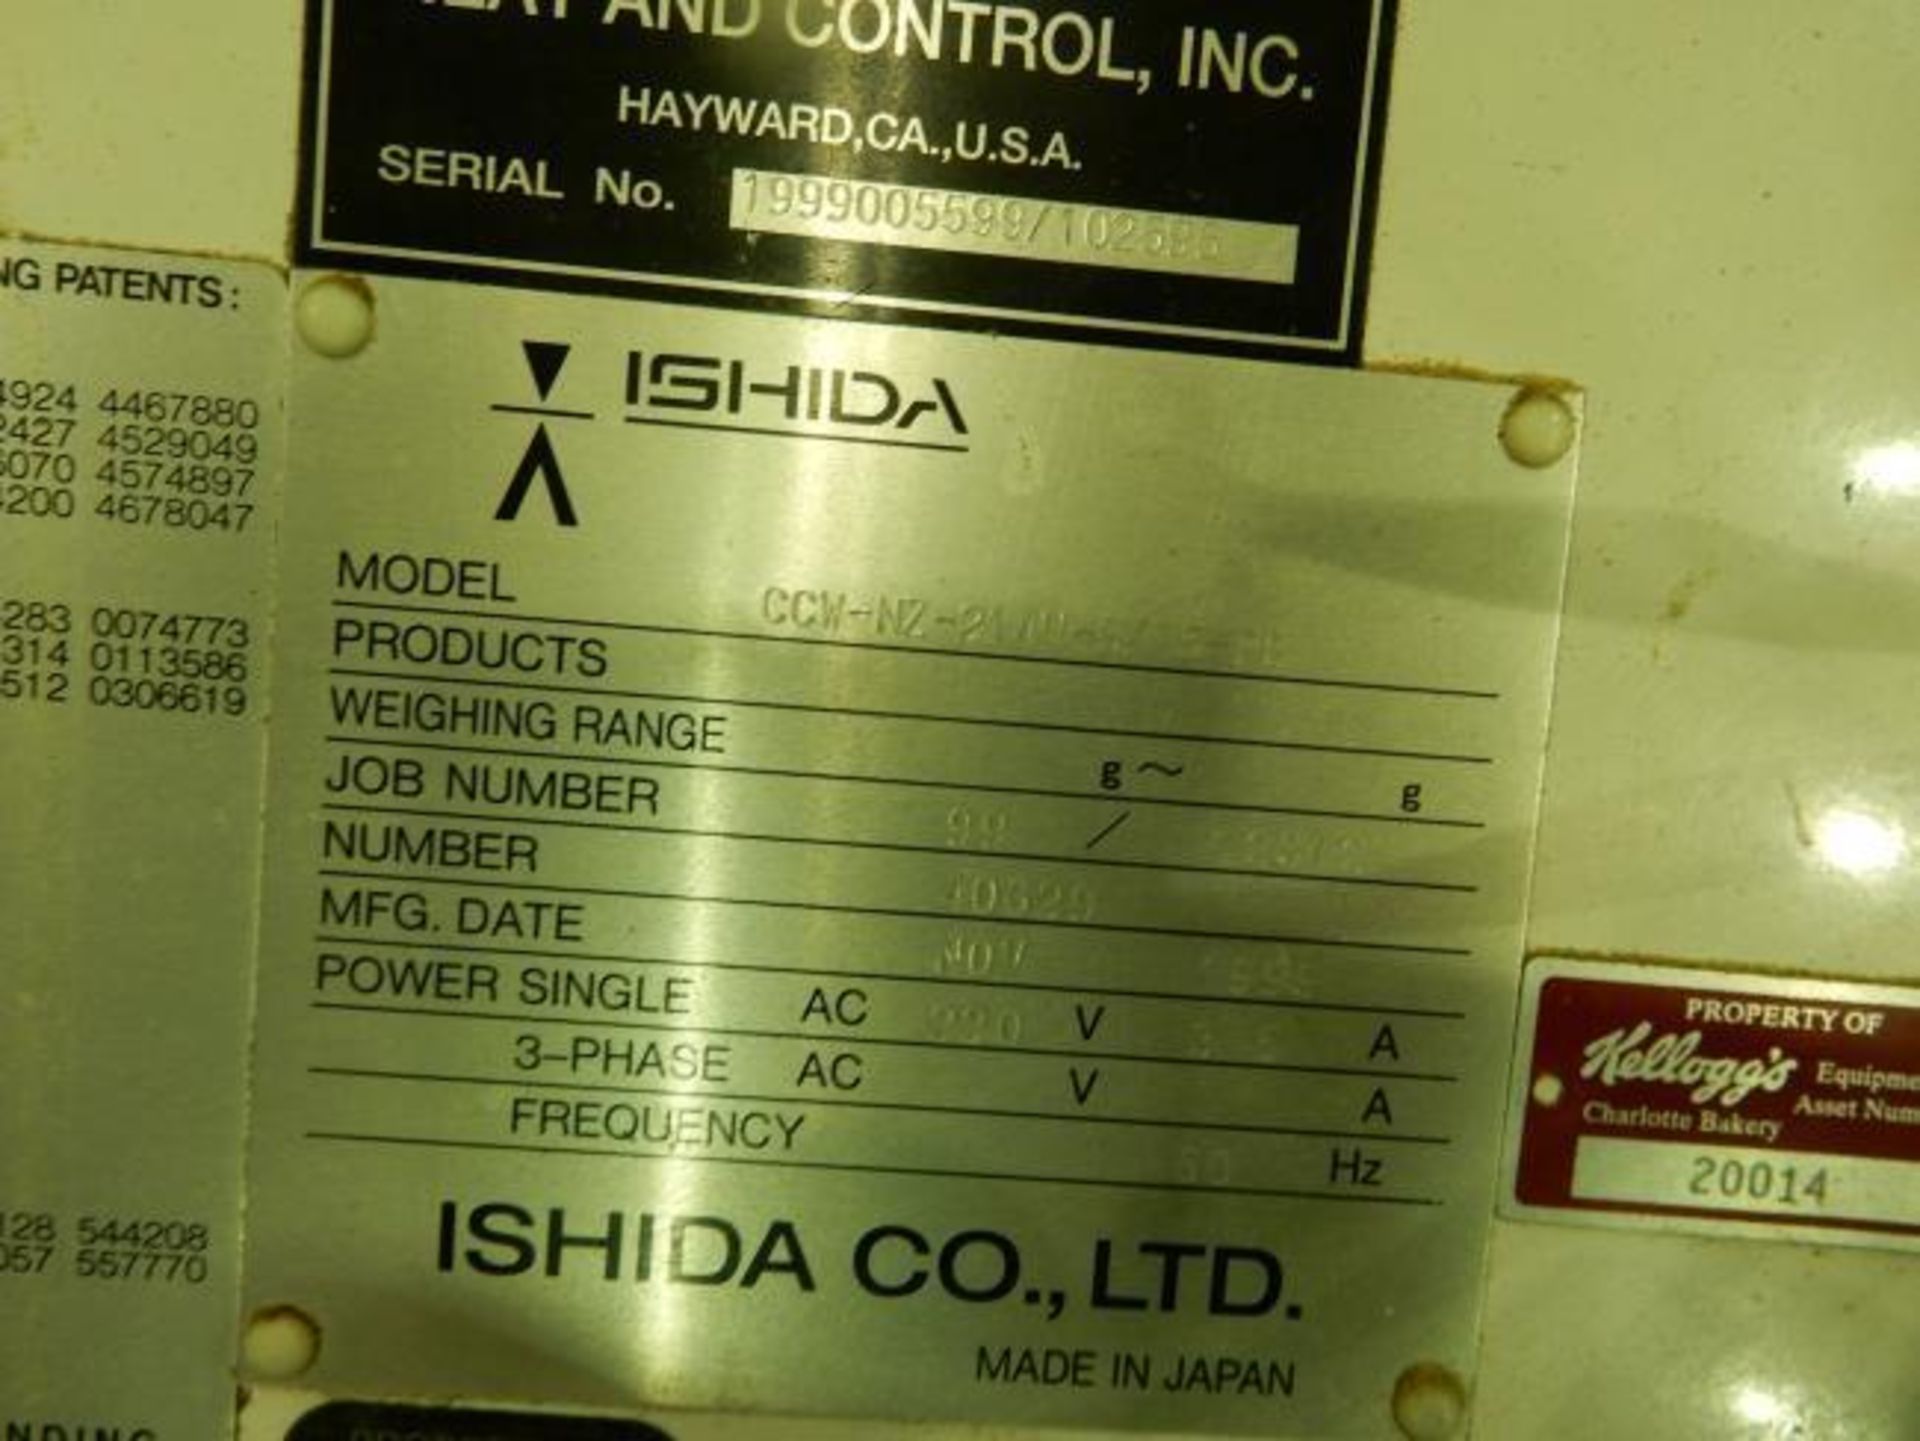 Ishida CCW-NZ-214W-S/15-PB scale - Image 4 of 4